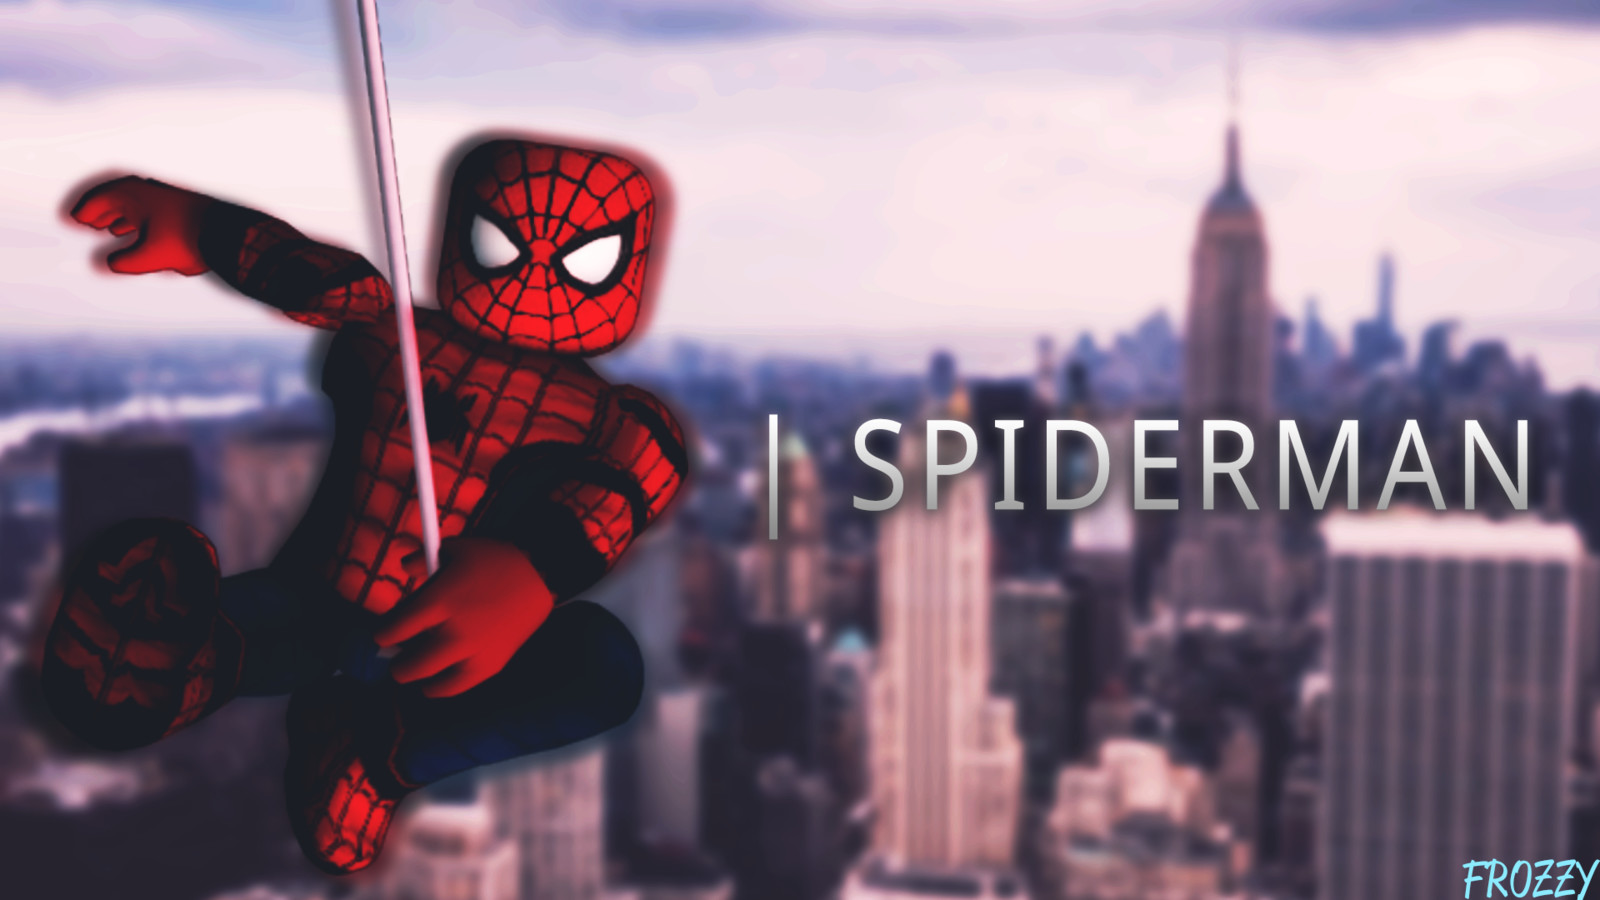 Spiderman render GFX, Jordan Williams